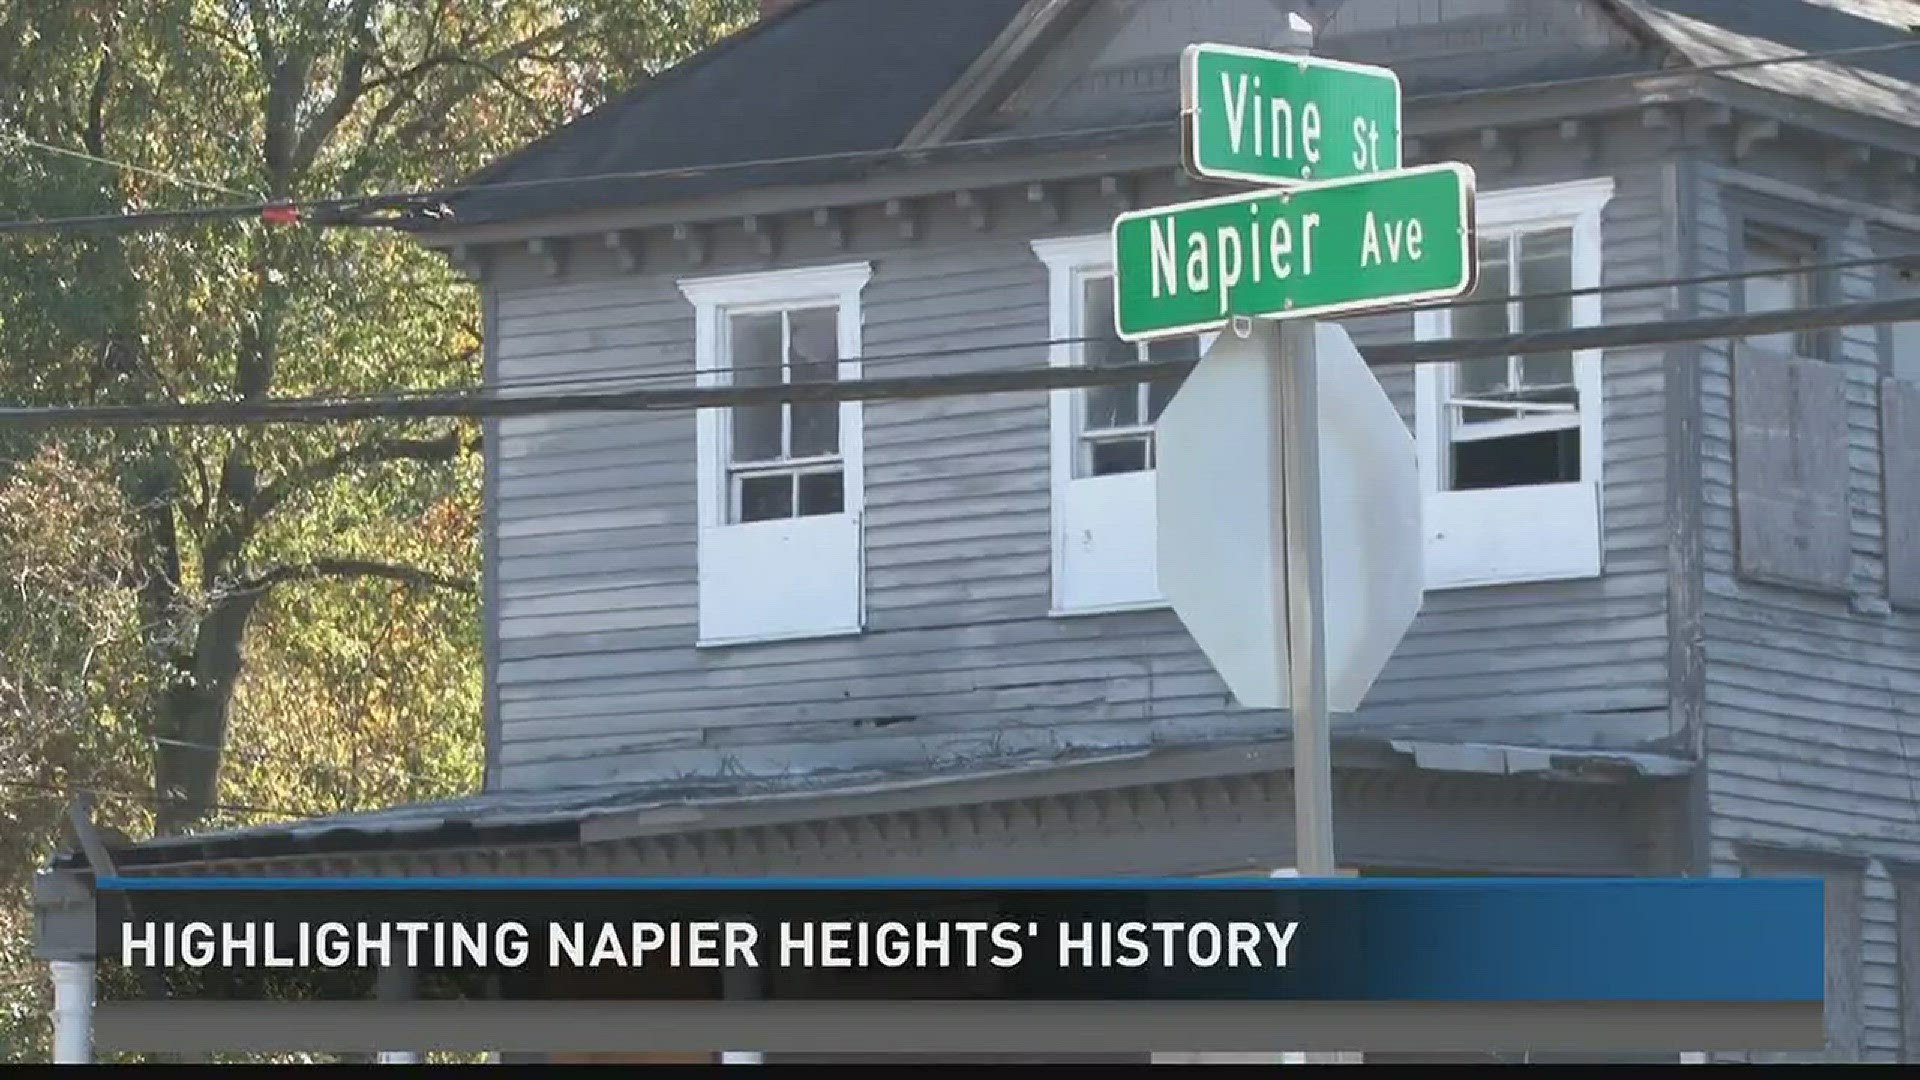 Highlighting Napier Heights' history